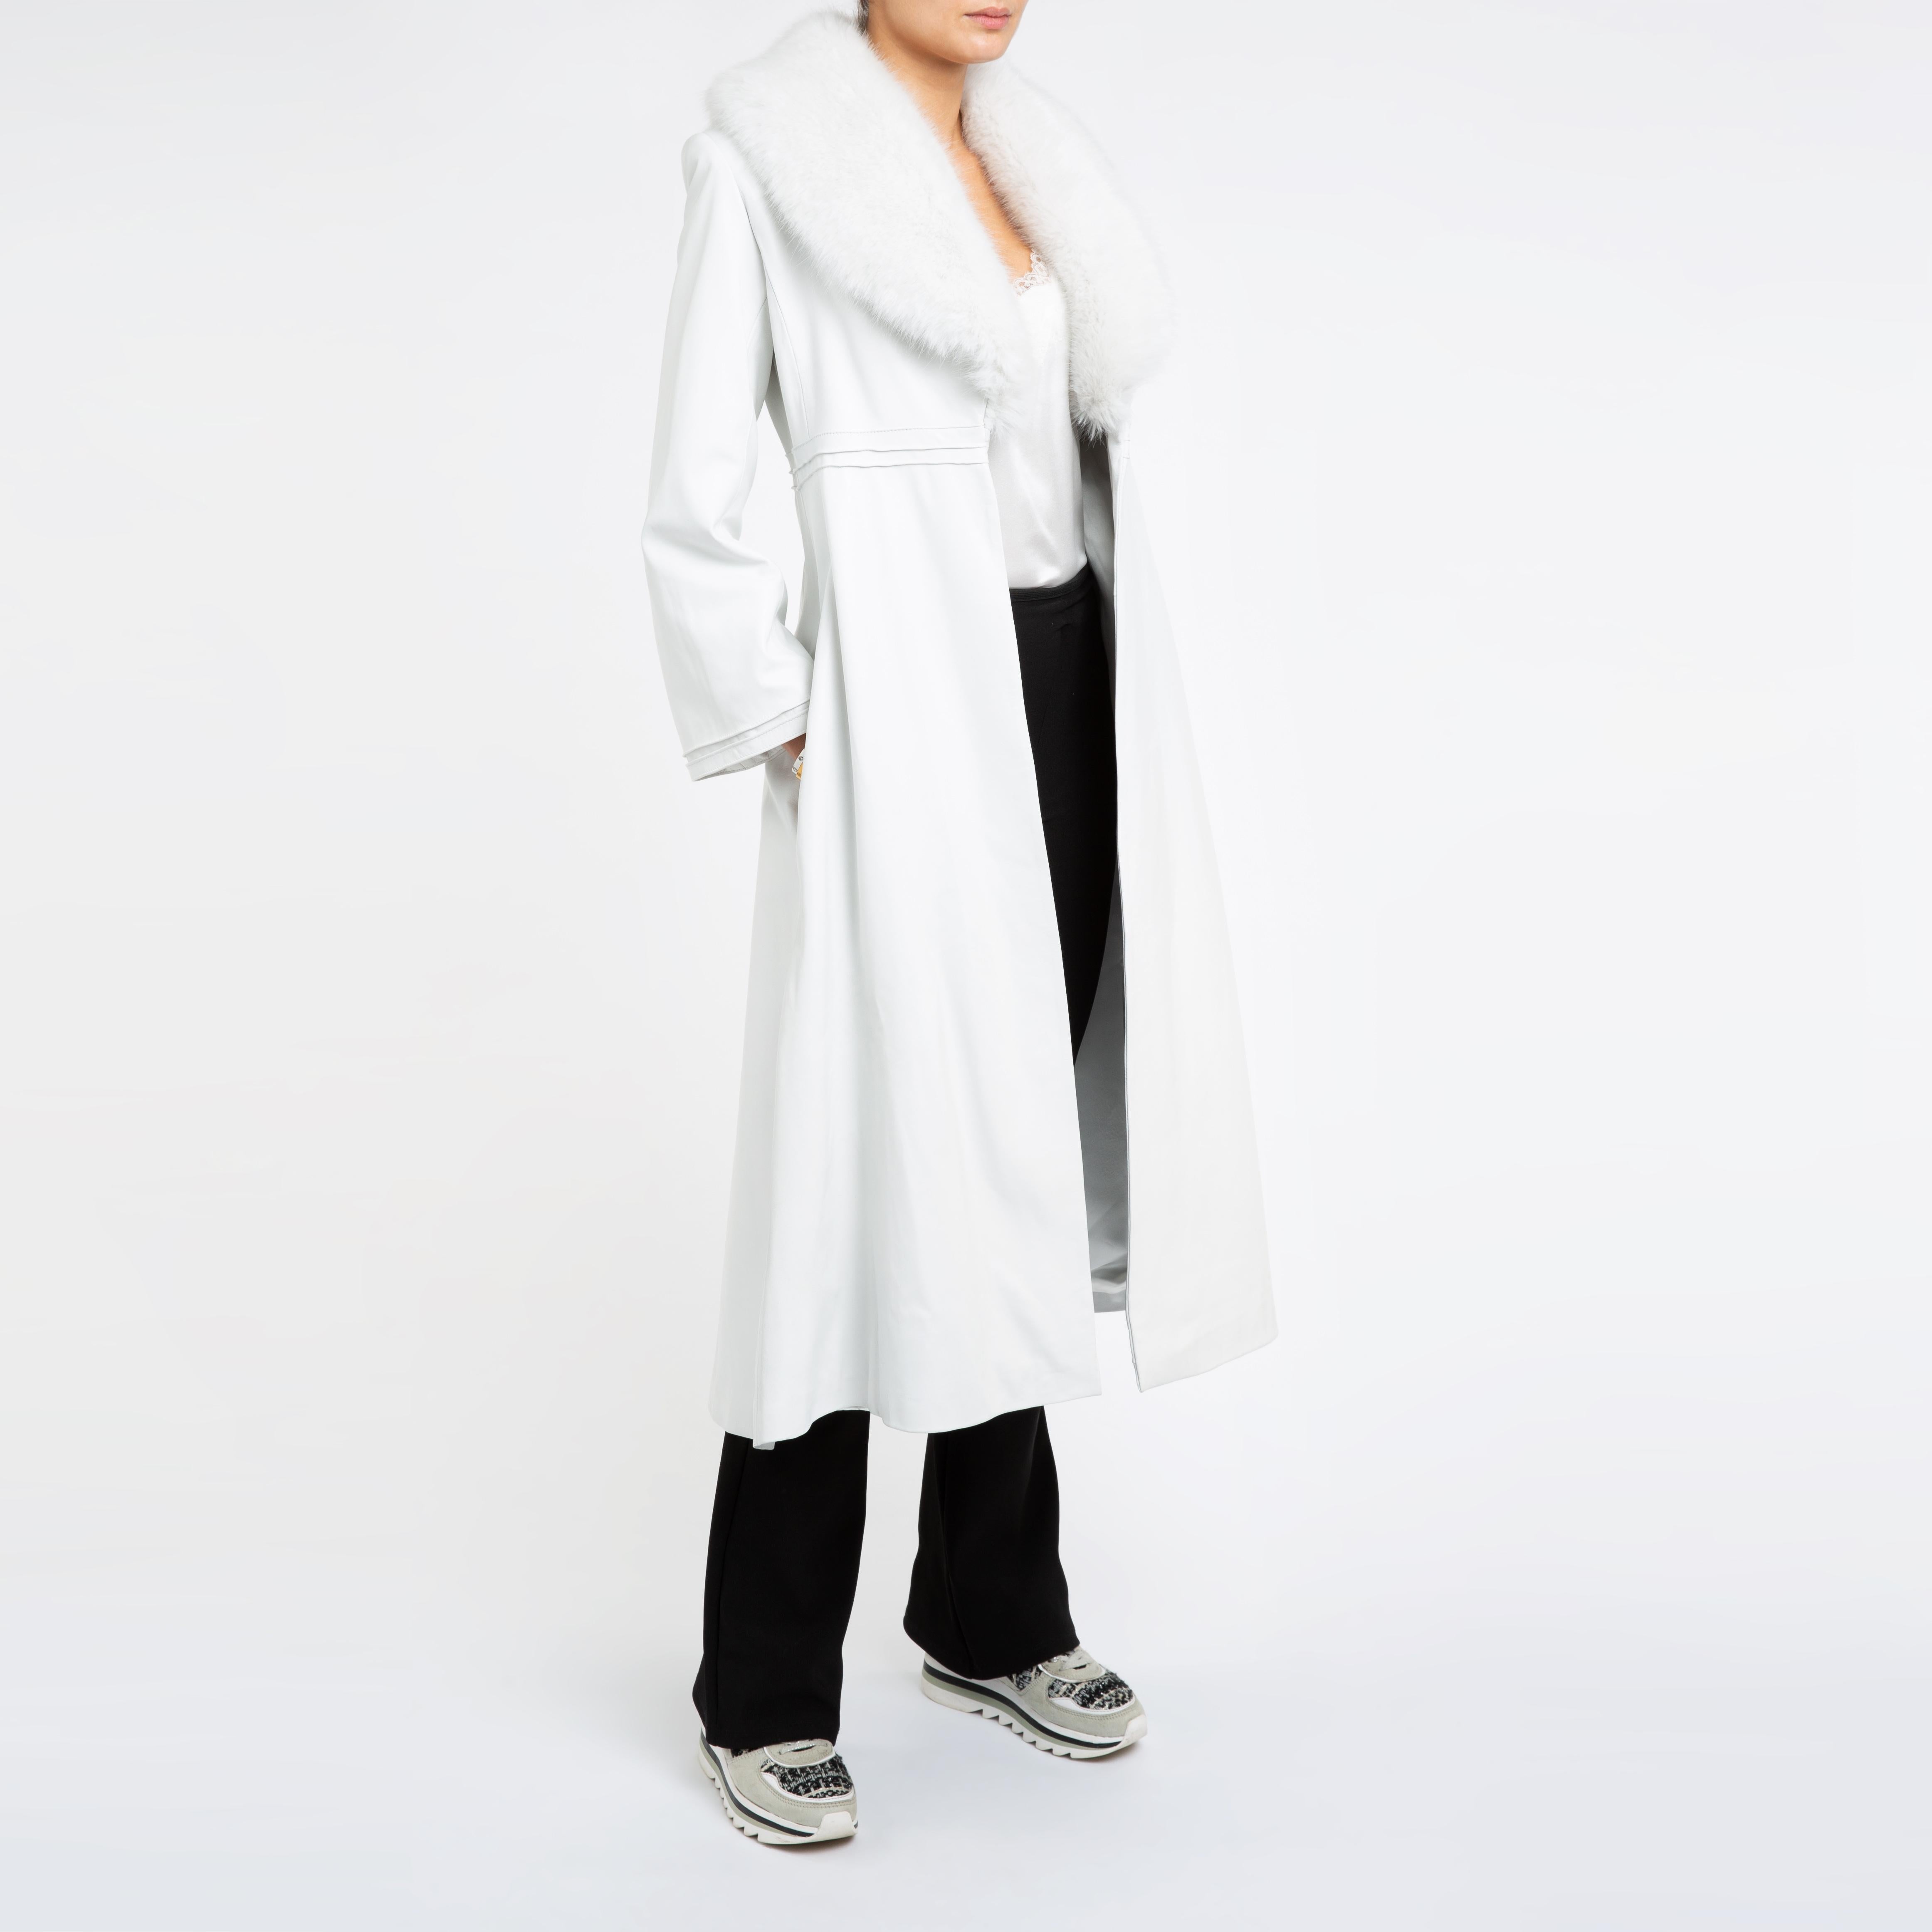 Verheyen London Edward Leather Coat in Aquamarine & White Faux Fur - Size 10 UK  3